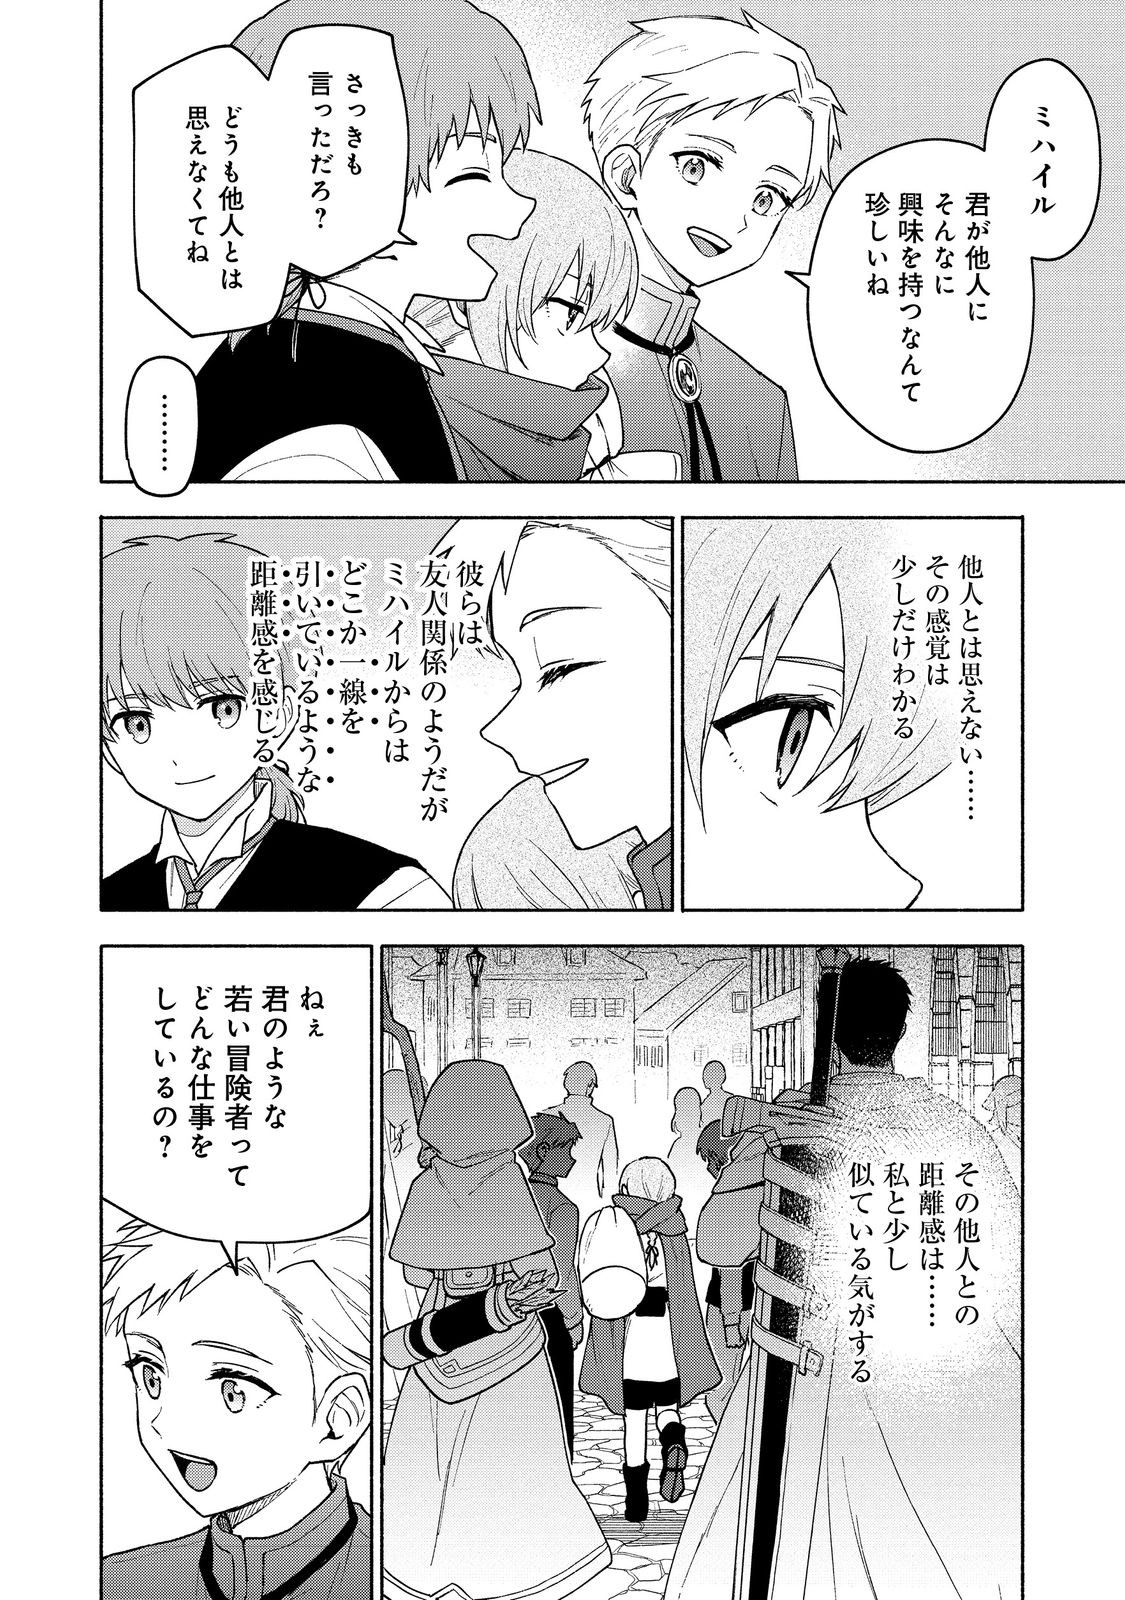 Otome Game no Heroine de Saikyou Survival - Chapter 22 - Page 12